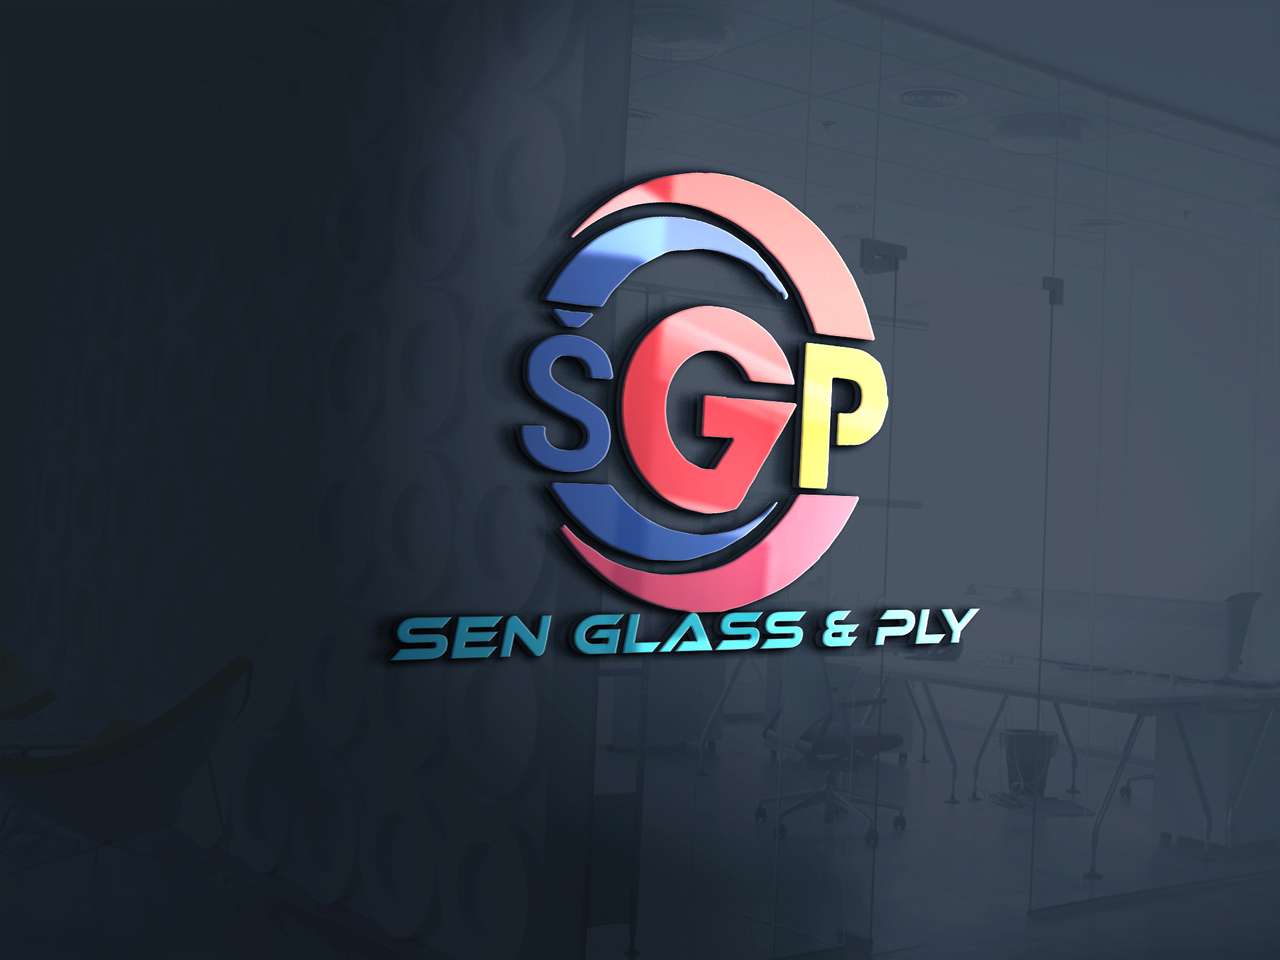 SEN GLASS & PLY pussel online från foto